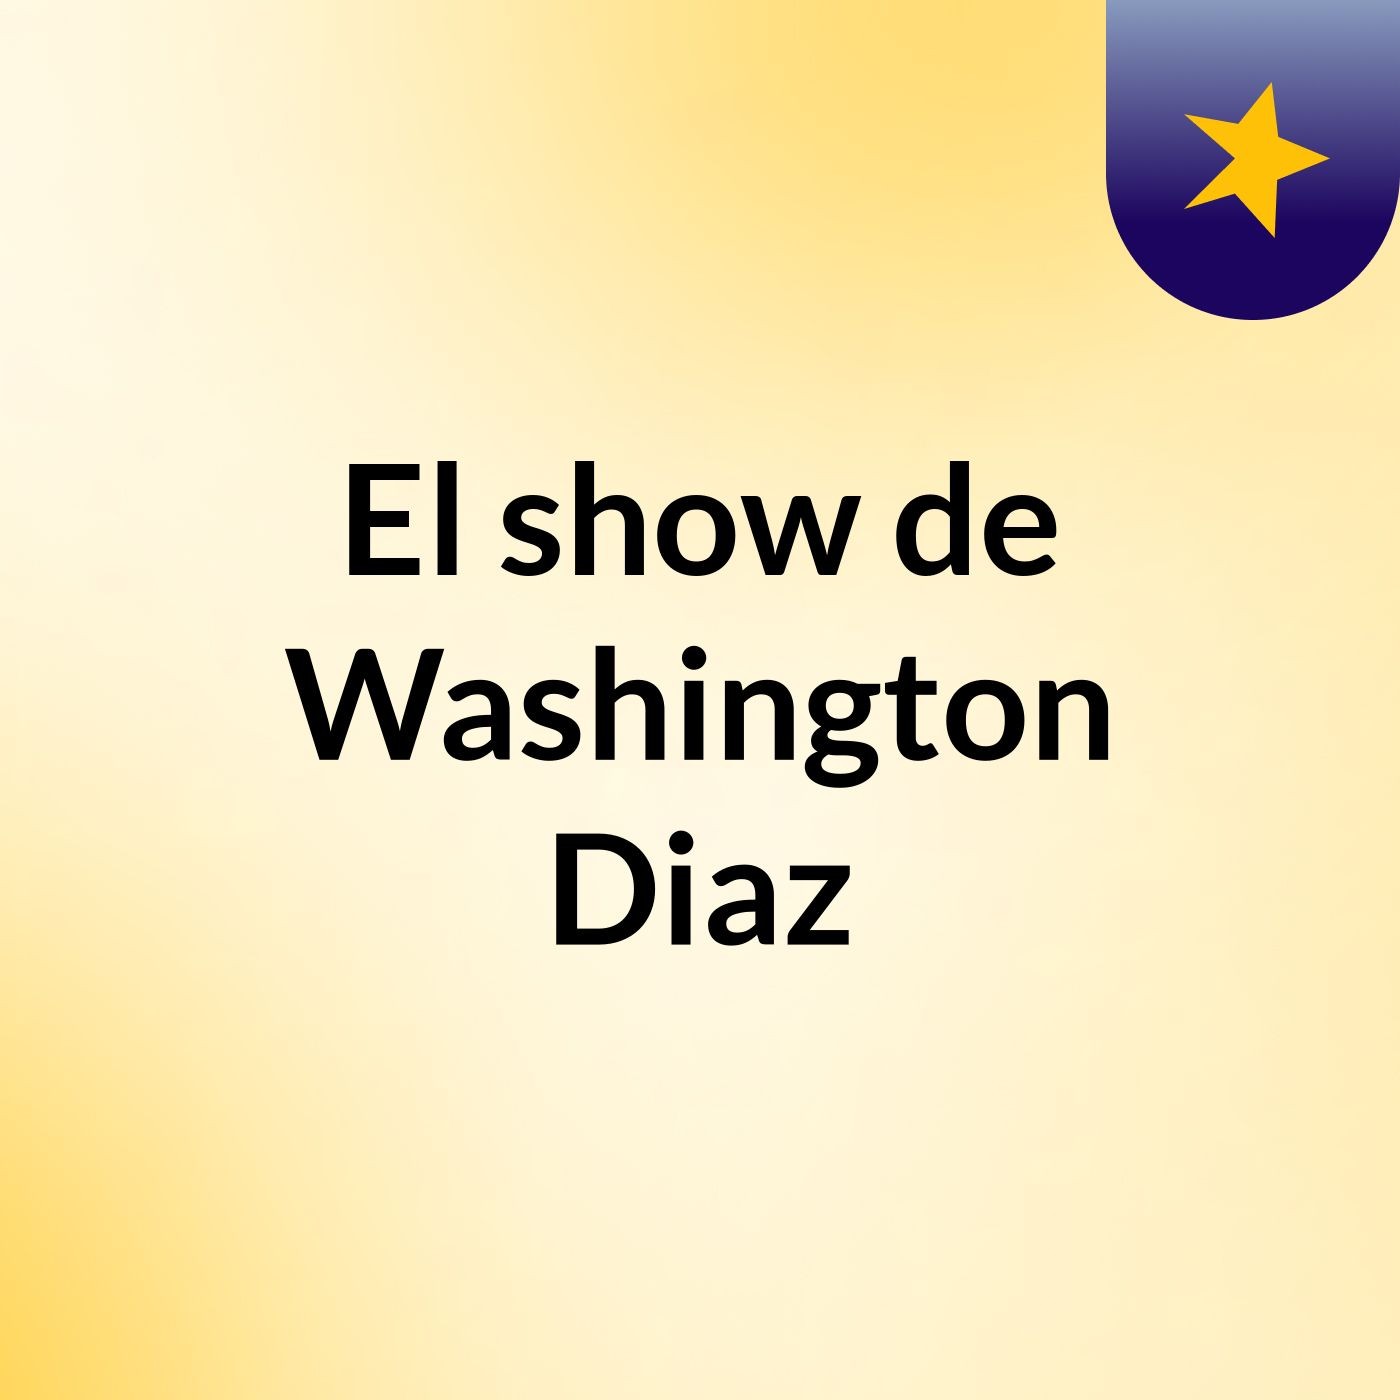 El show de Washington Diaz